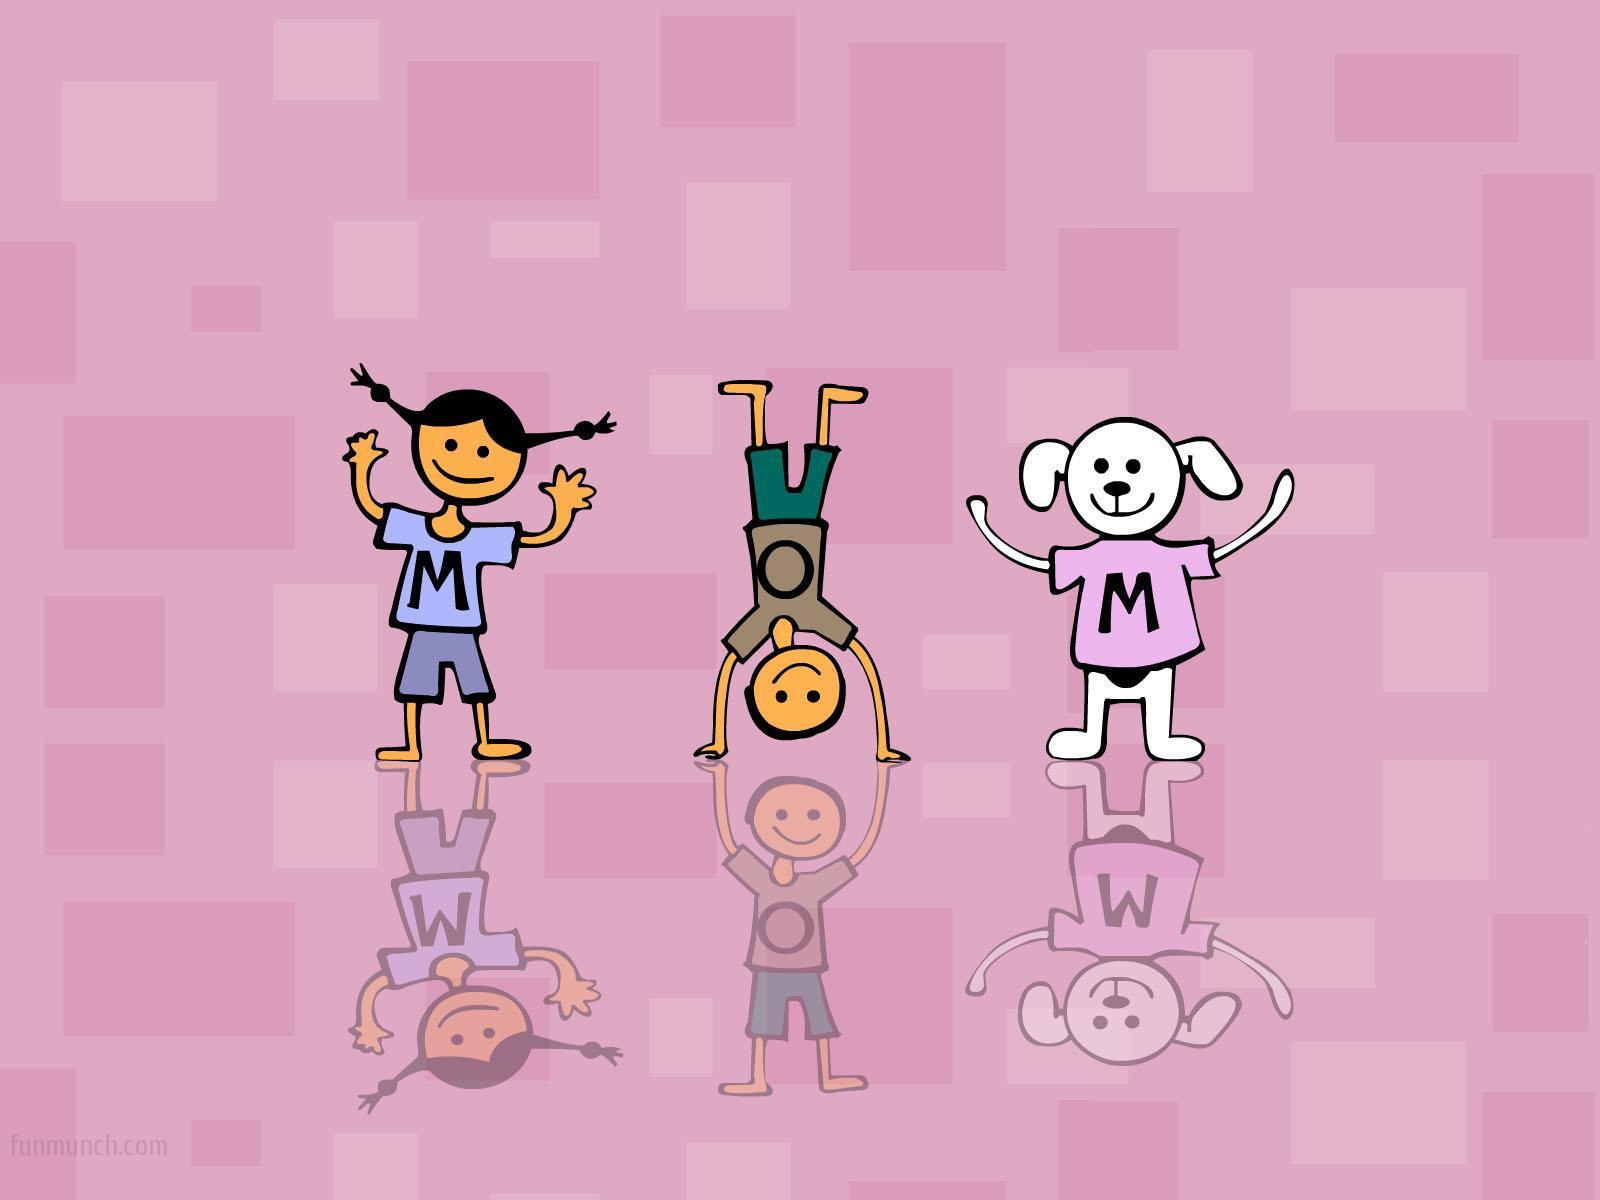 Mothers Day Cartoon Wallpaper Desktop Background